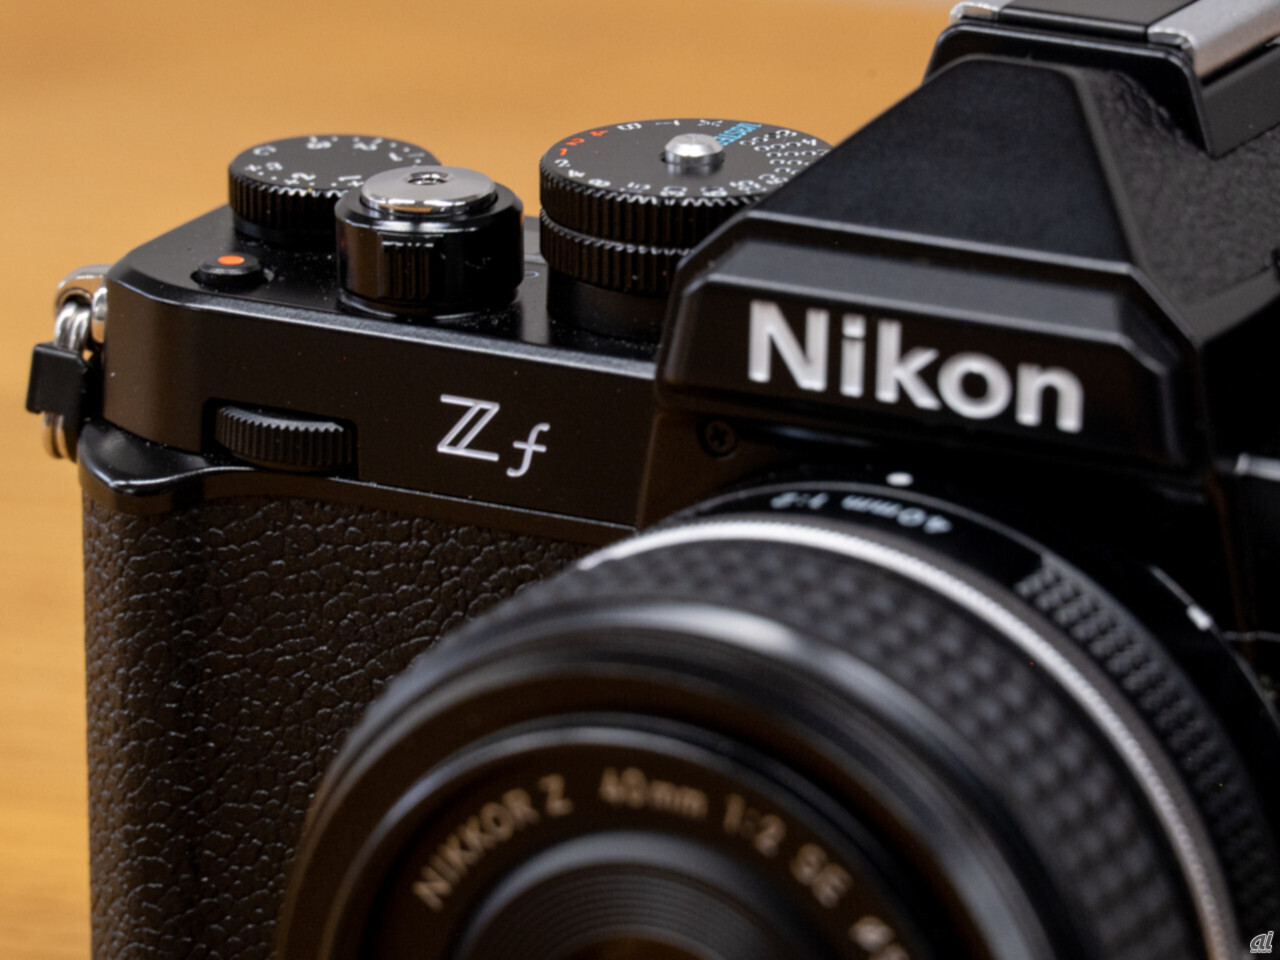 Nikon ニコン ZF zf用ハンドグリップとレリーズシャッターボタン図には